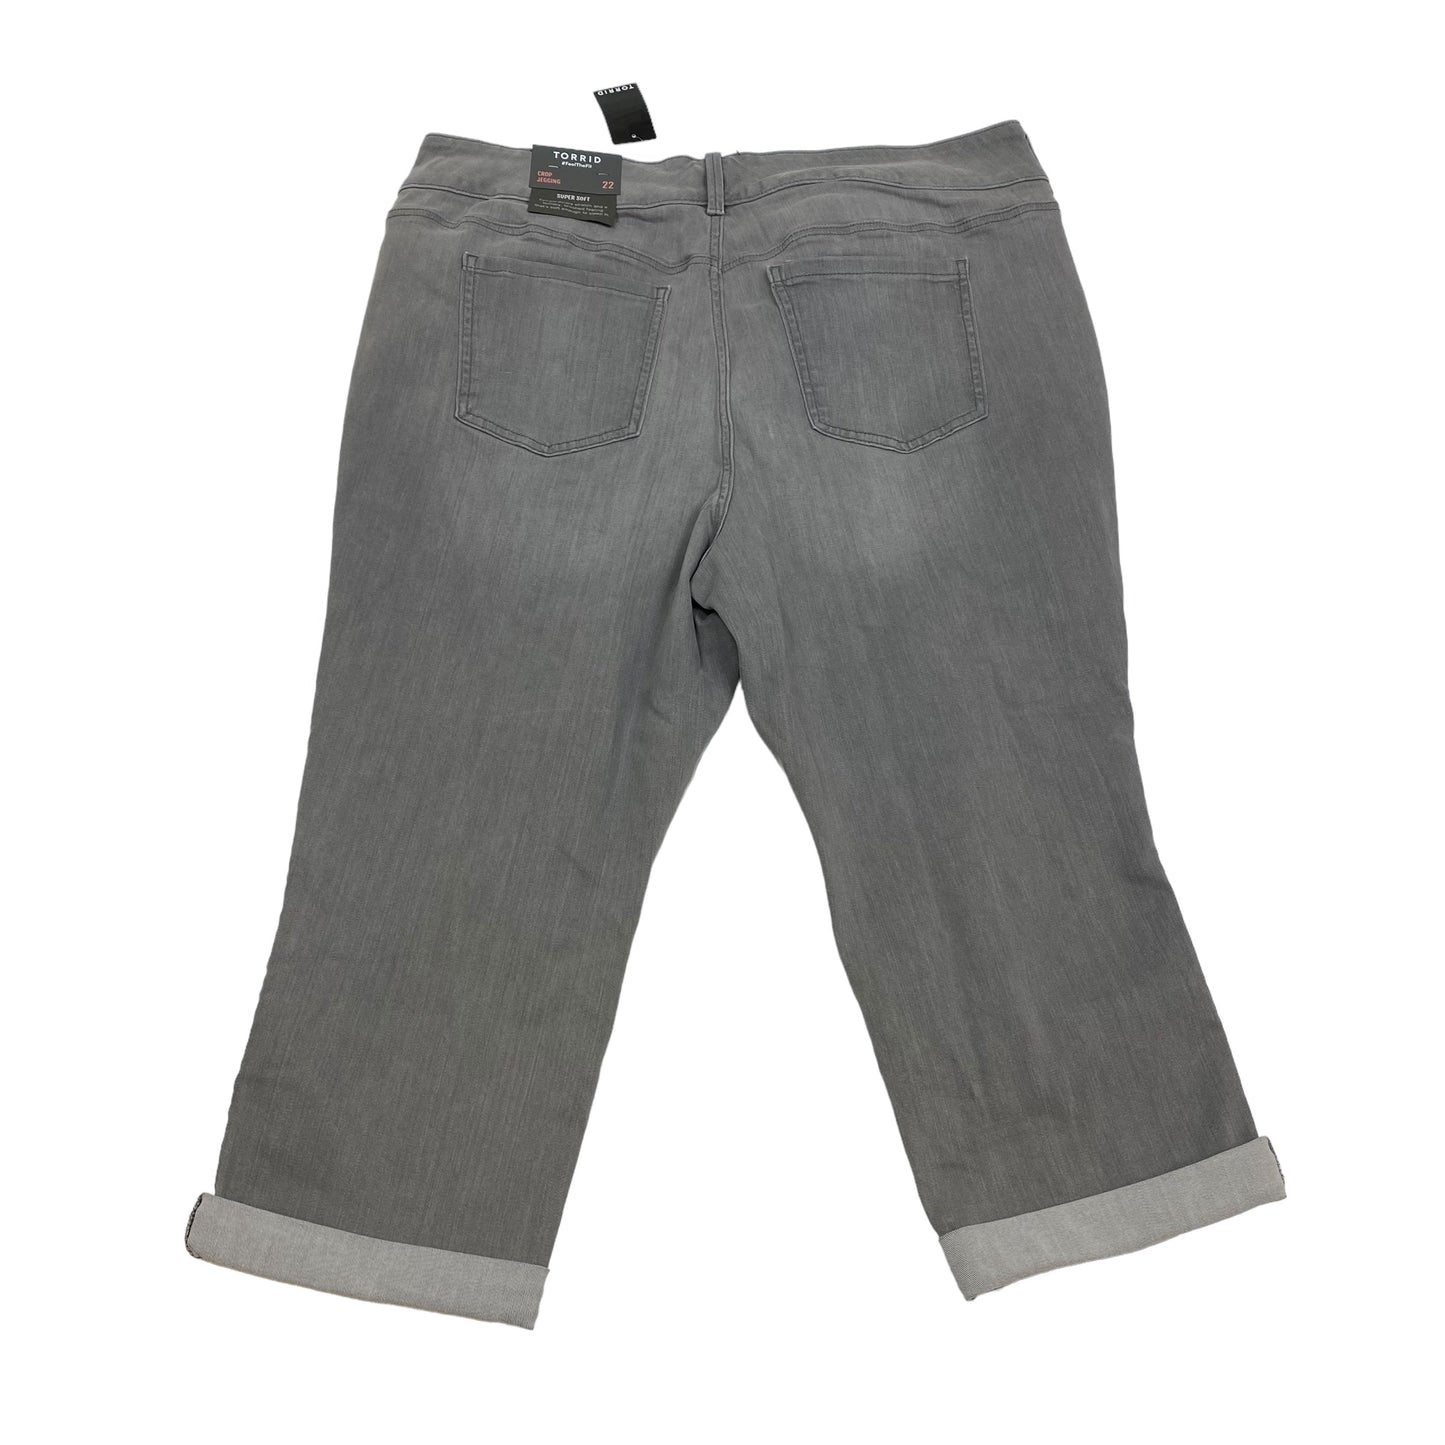 Grey Denim Jeans Cropped Torrid, Size 22